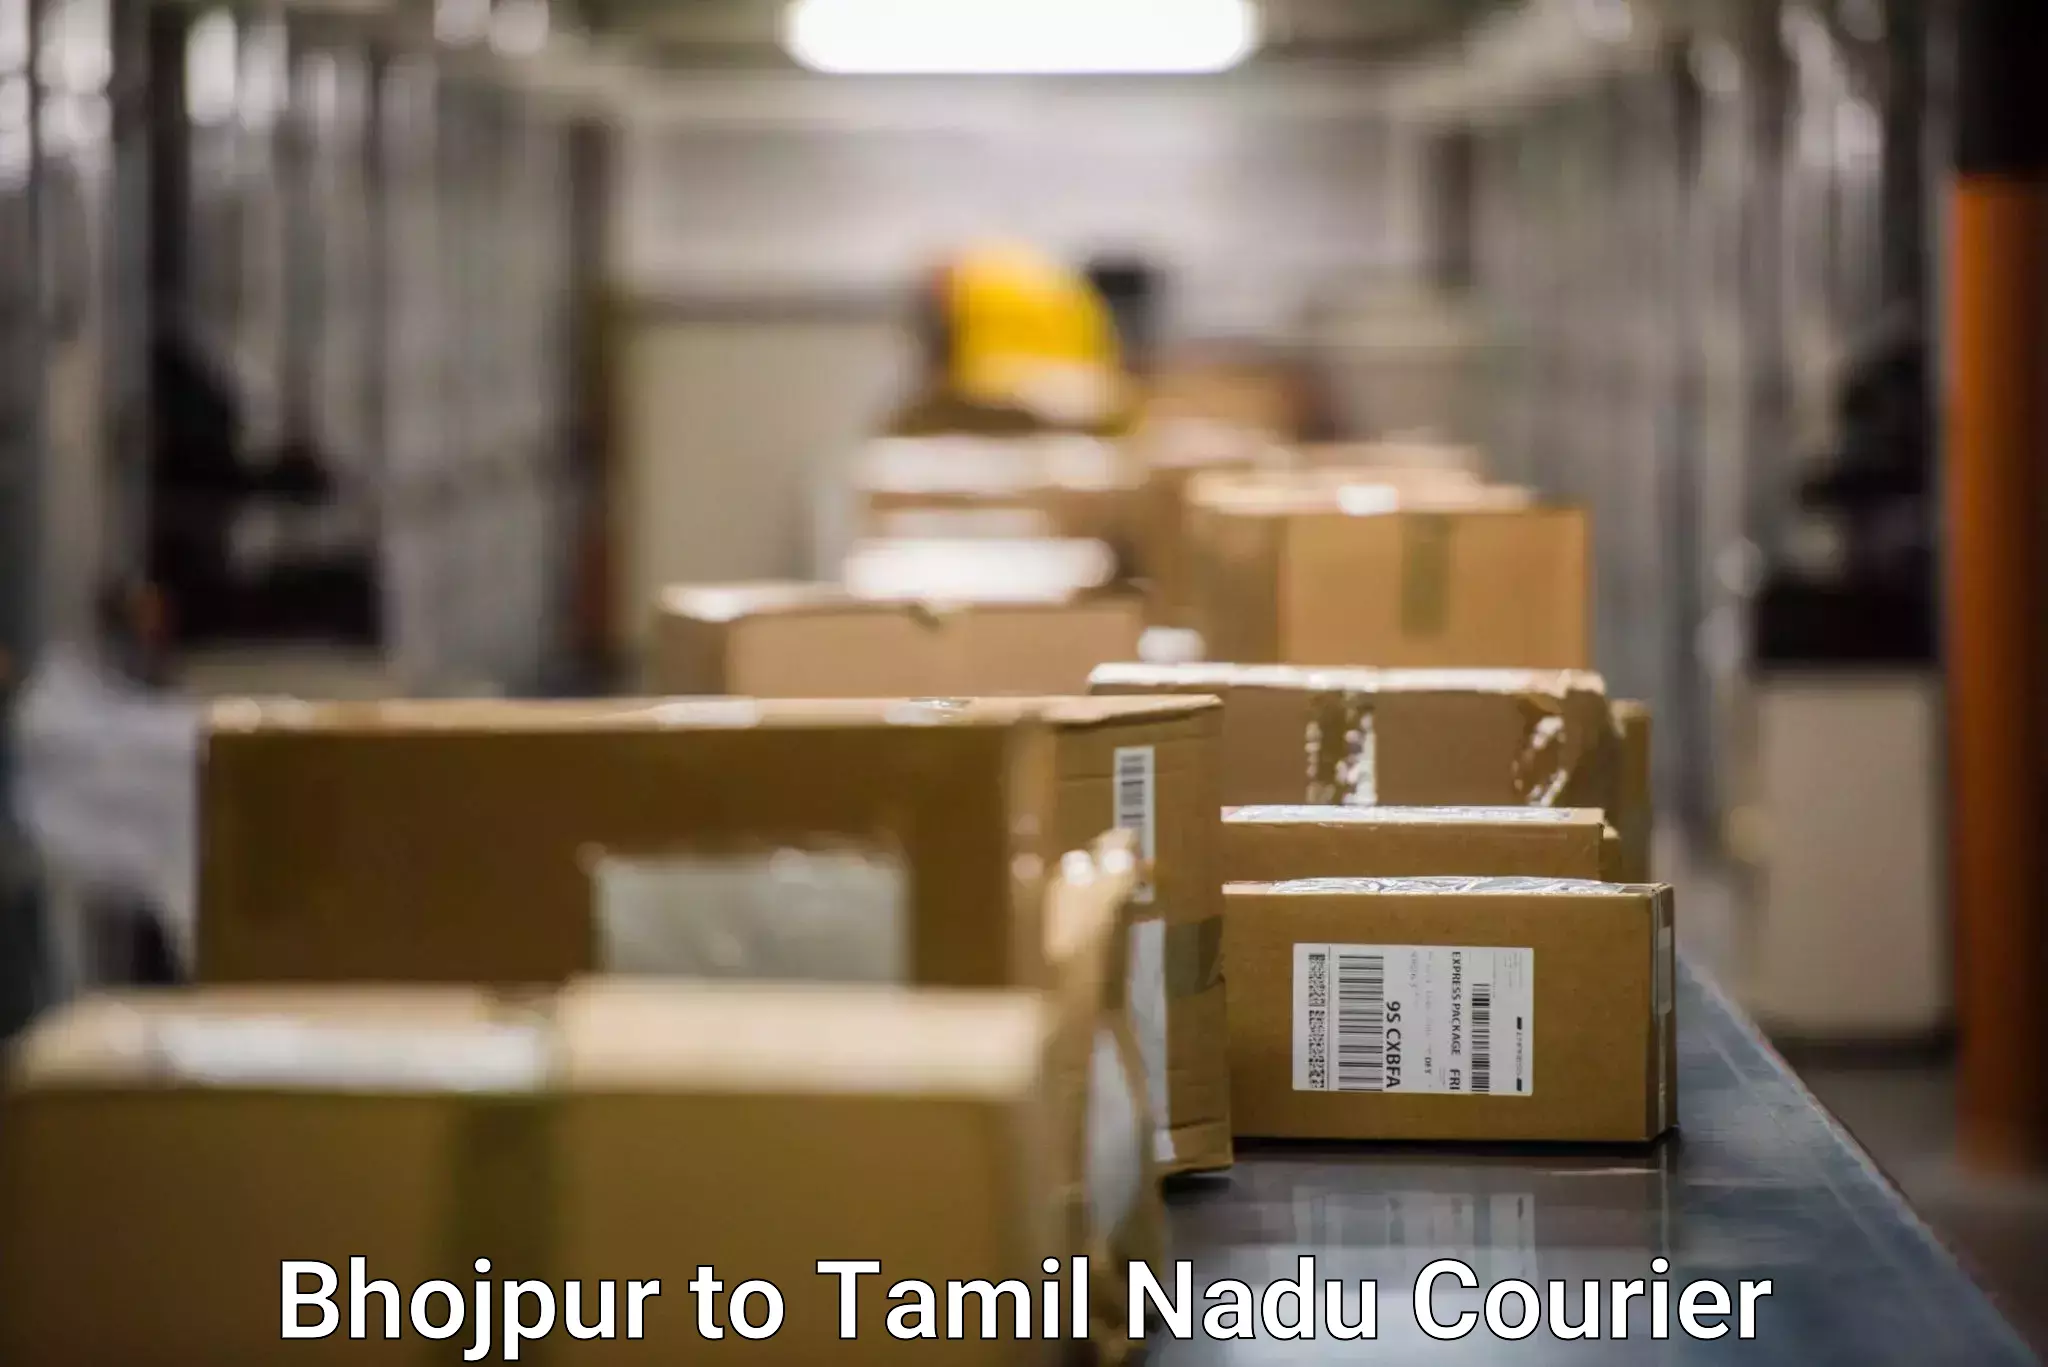 Flexible delivery schedules Bhojpur to Thiruvarur